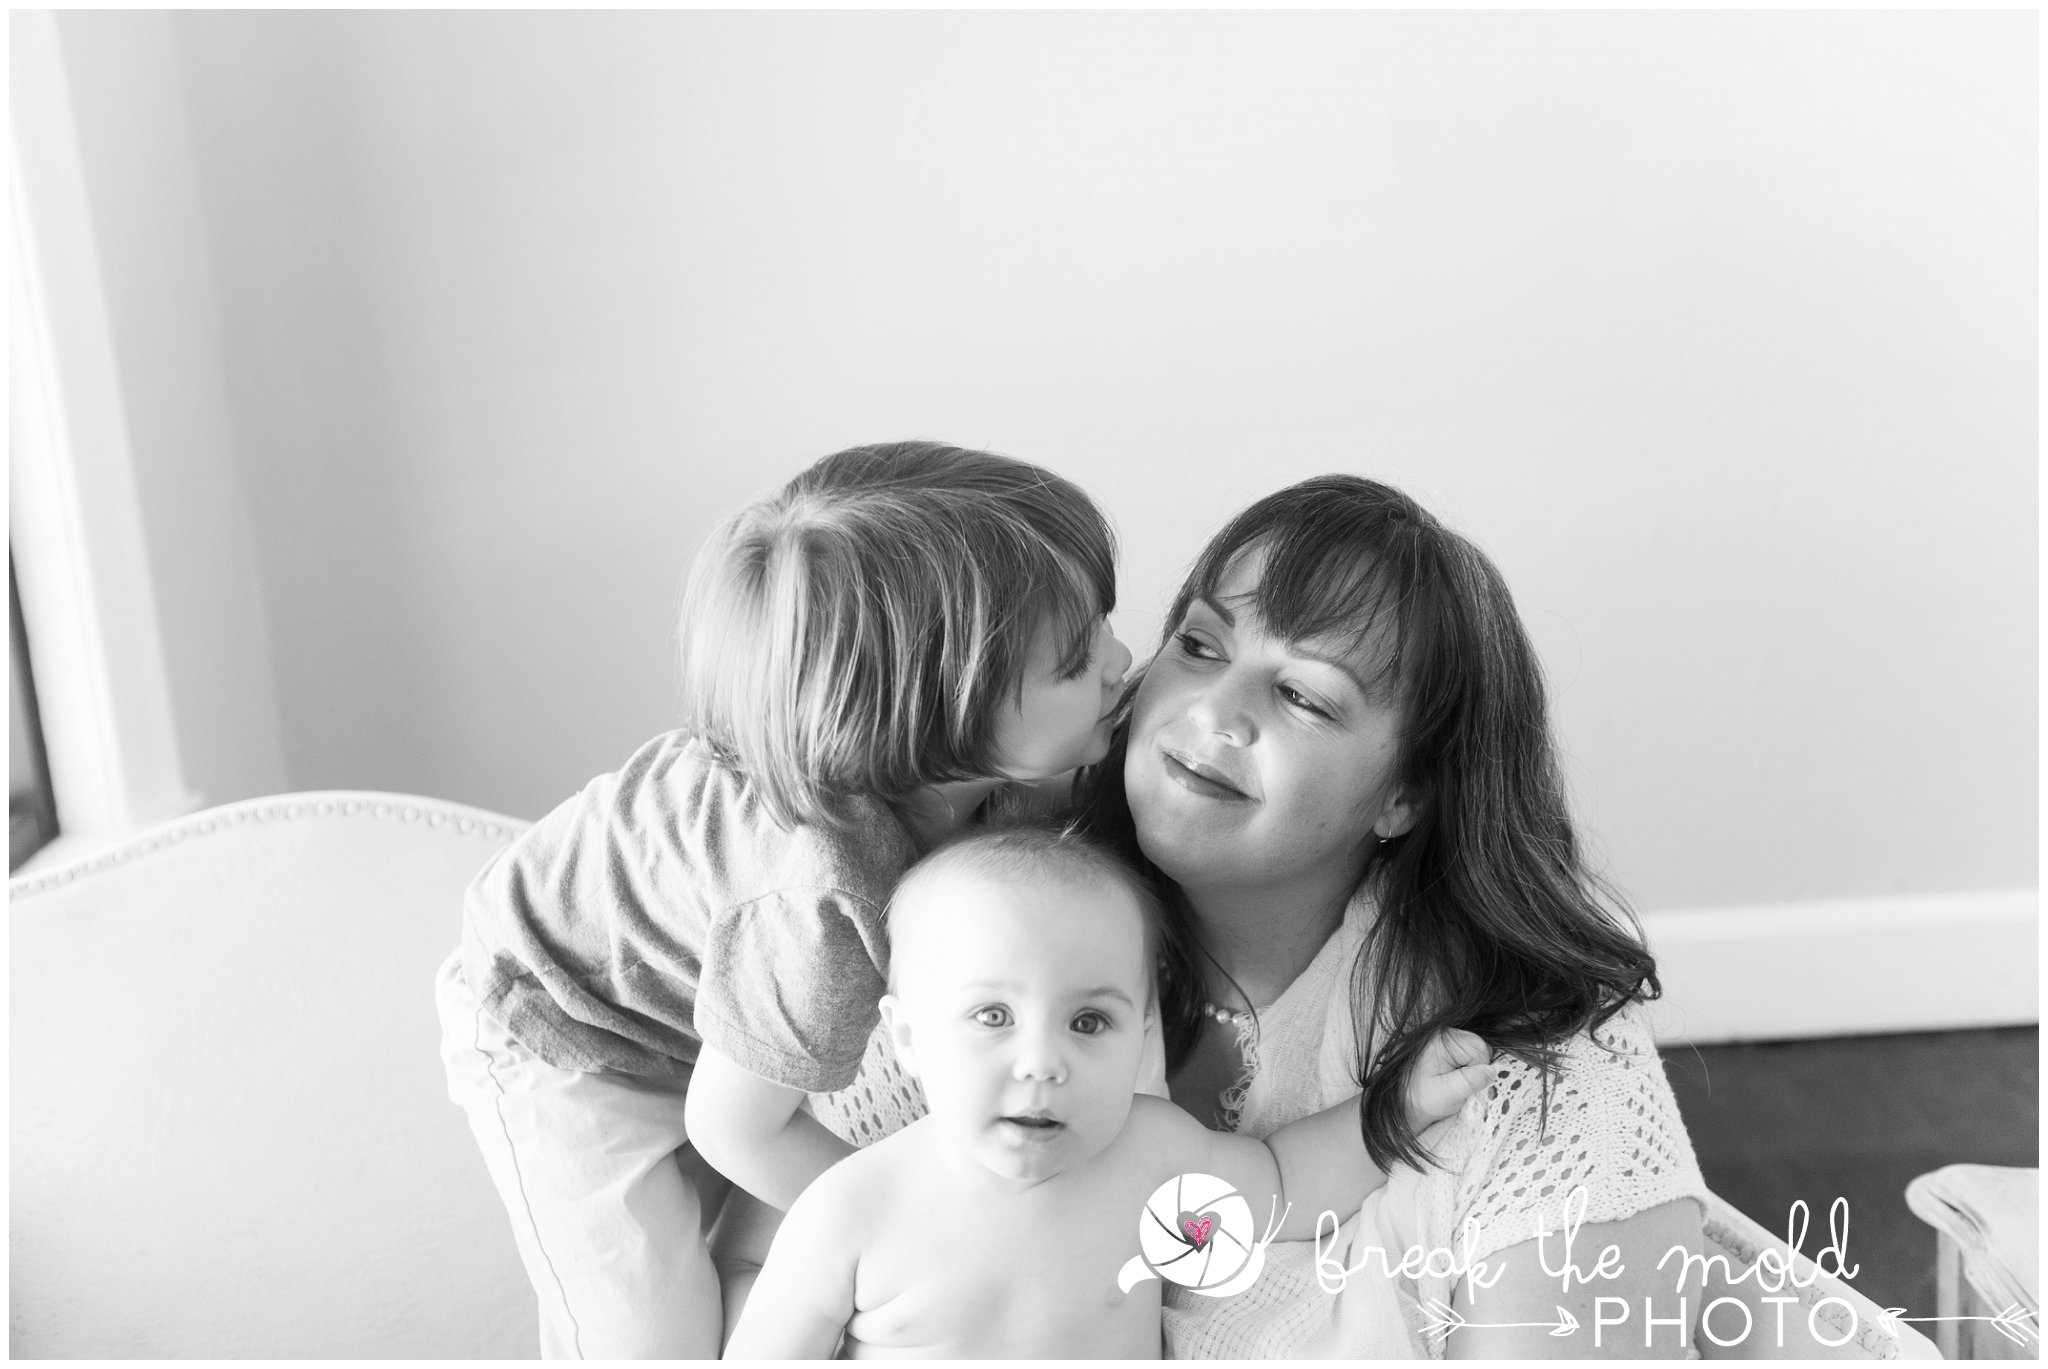 break-the-mold-photo-nursing-body-love-baby-pregnant-women-powerful-breastfeeding-sessions_7220.jpg